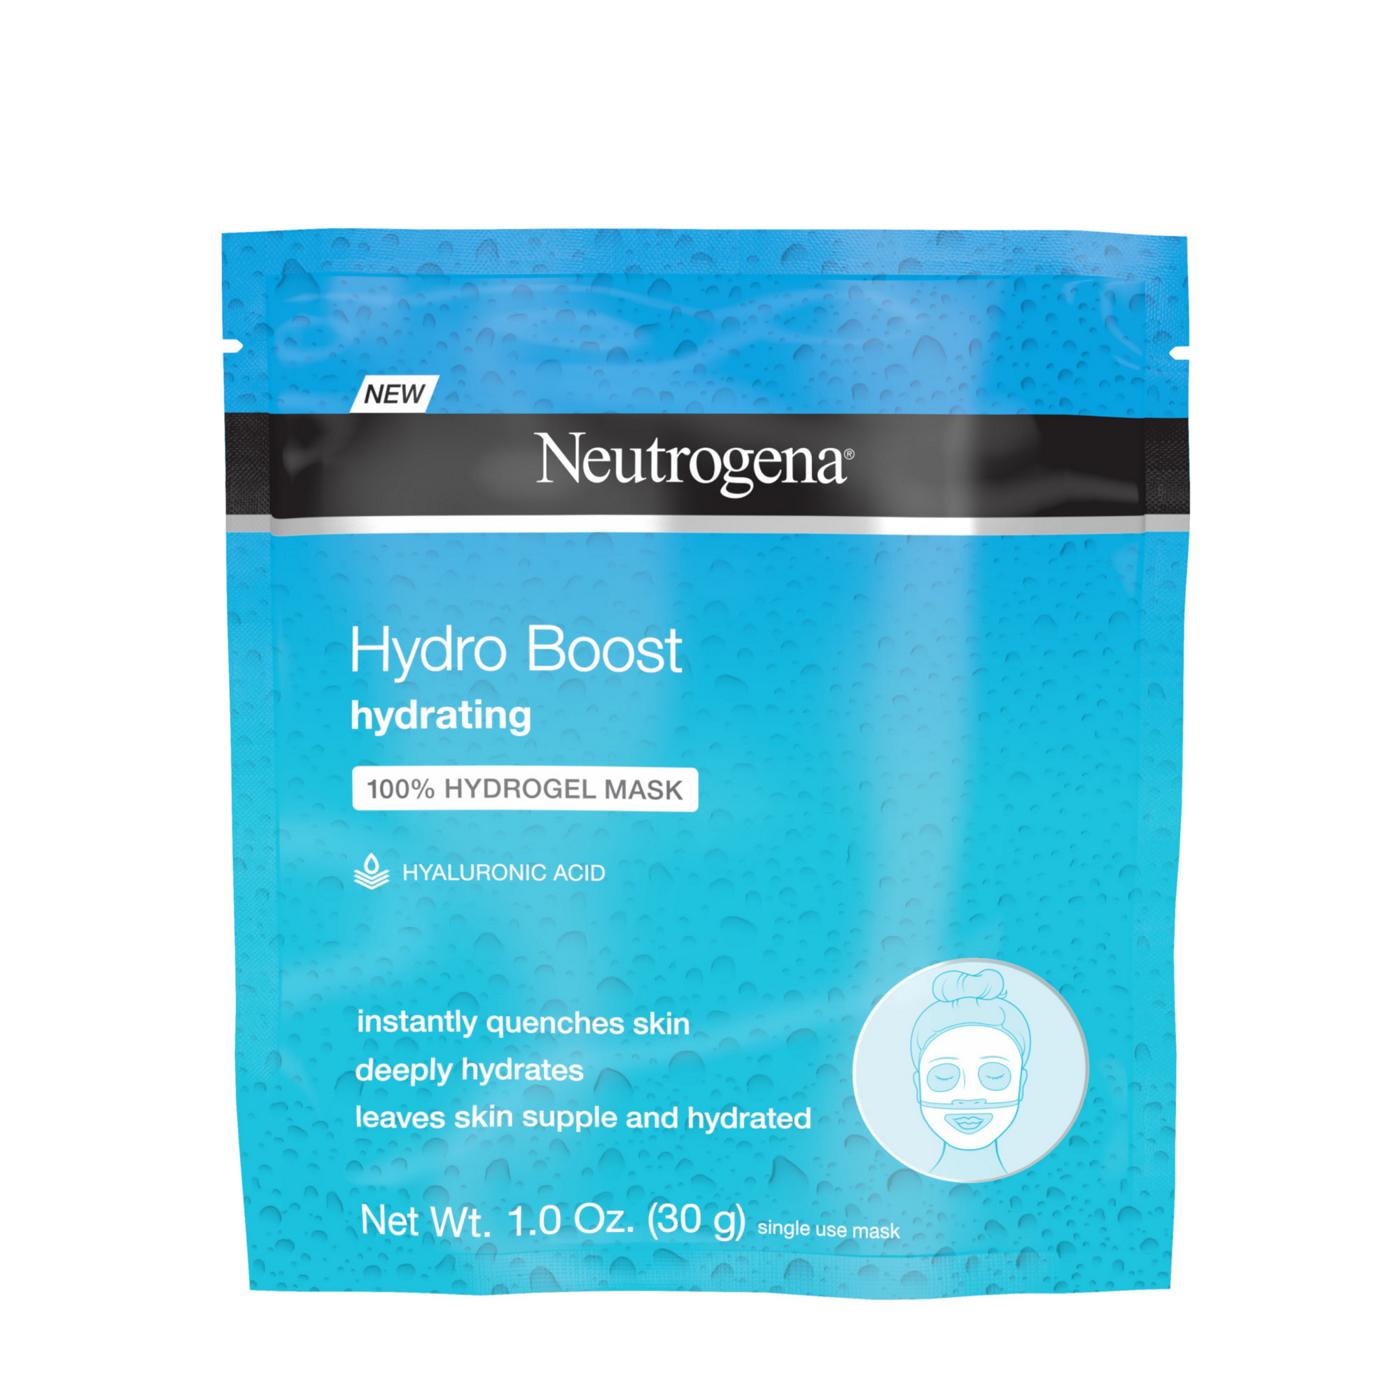 Neutrogena Hydro Boost Hydrating 100% Hydrogel Mask; image 1 of 4